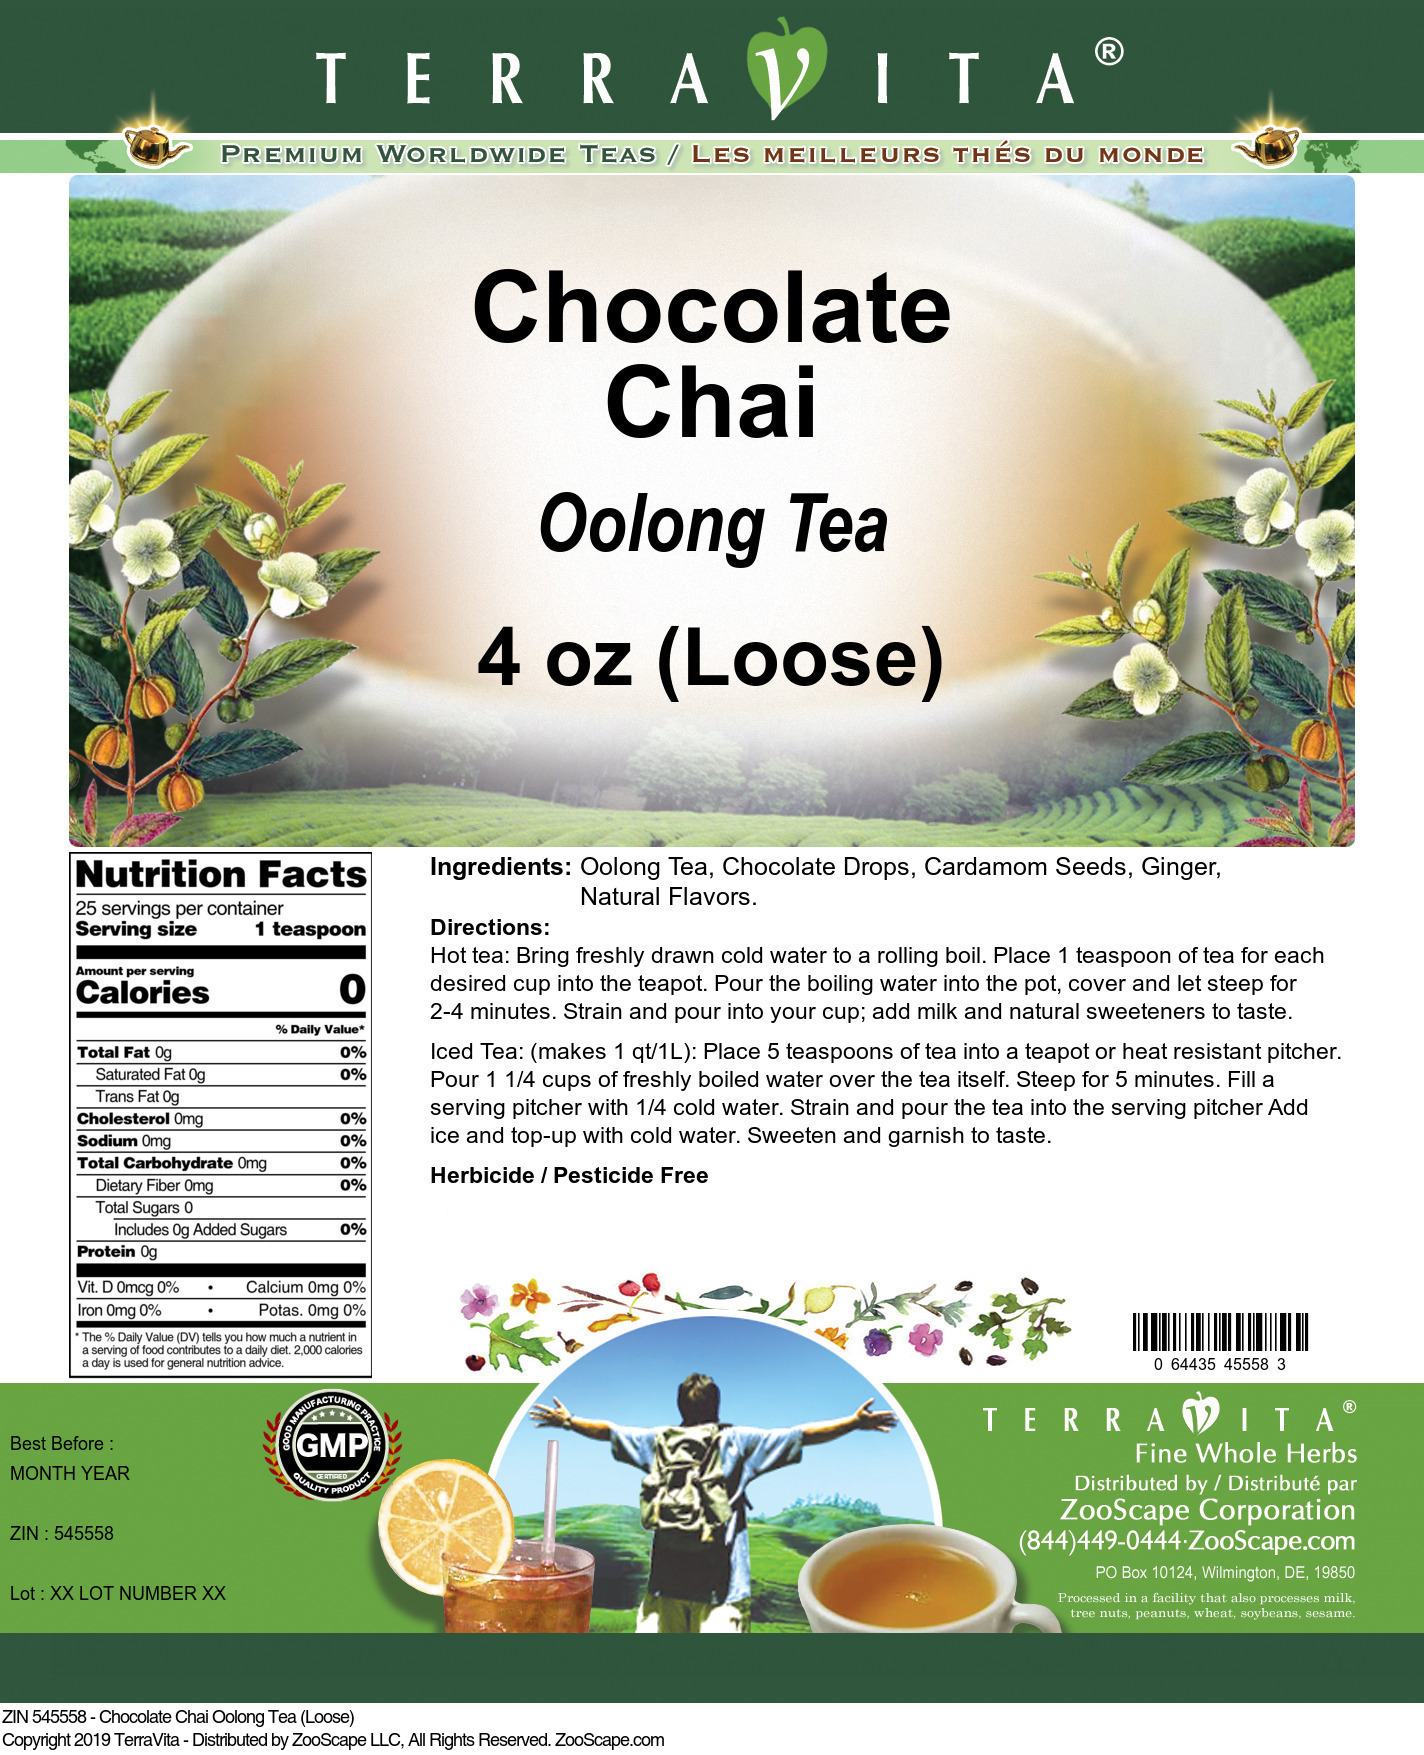 Chocolate Chai Oolong Tea (Loose) - Label